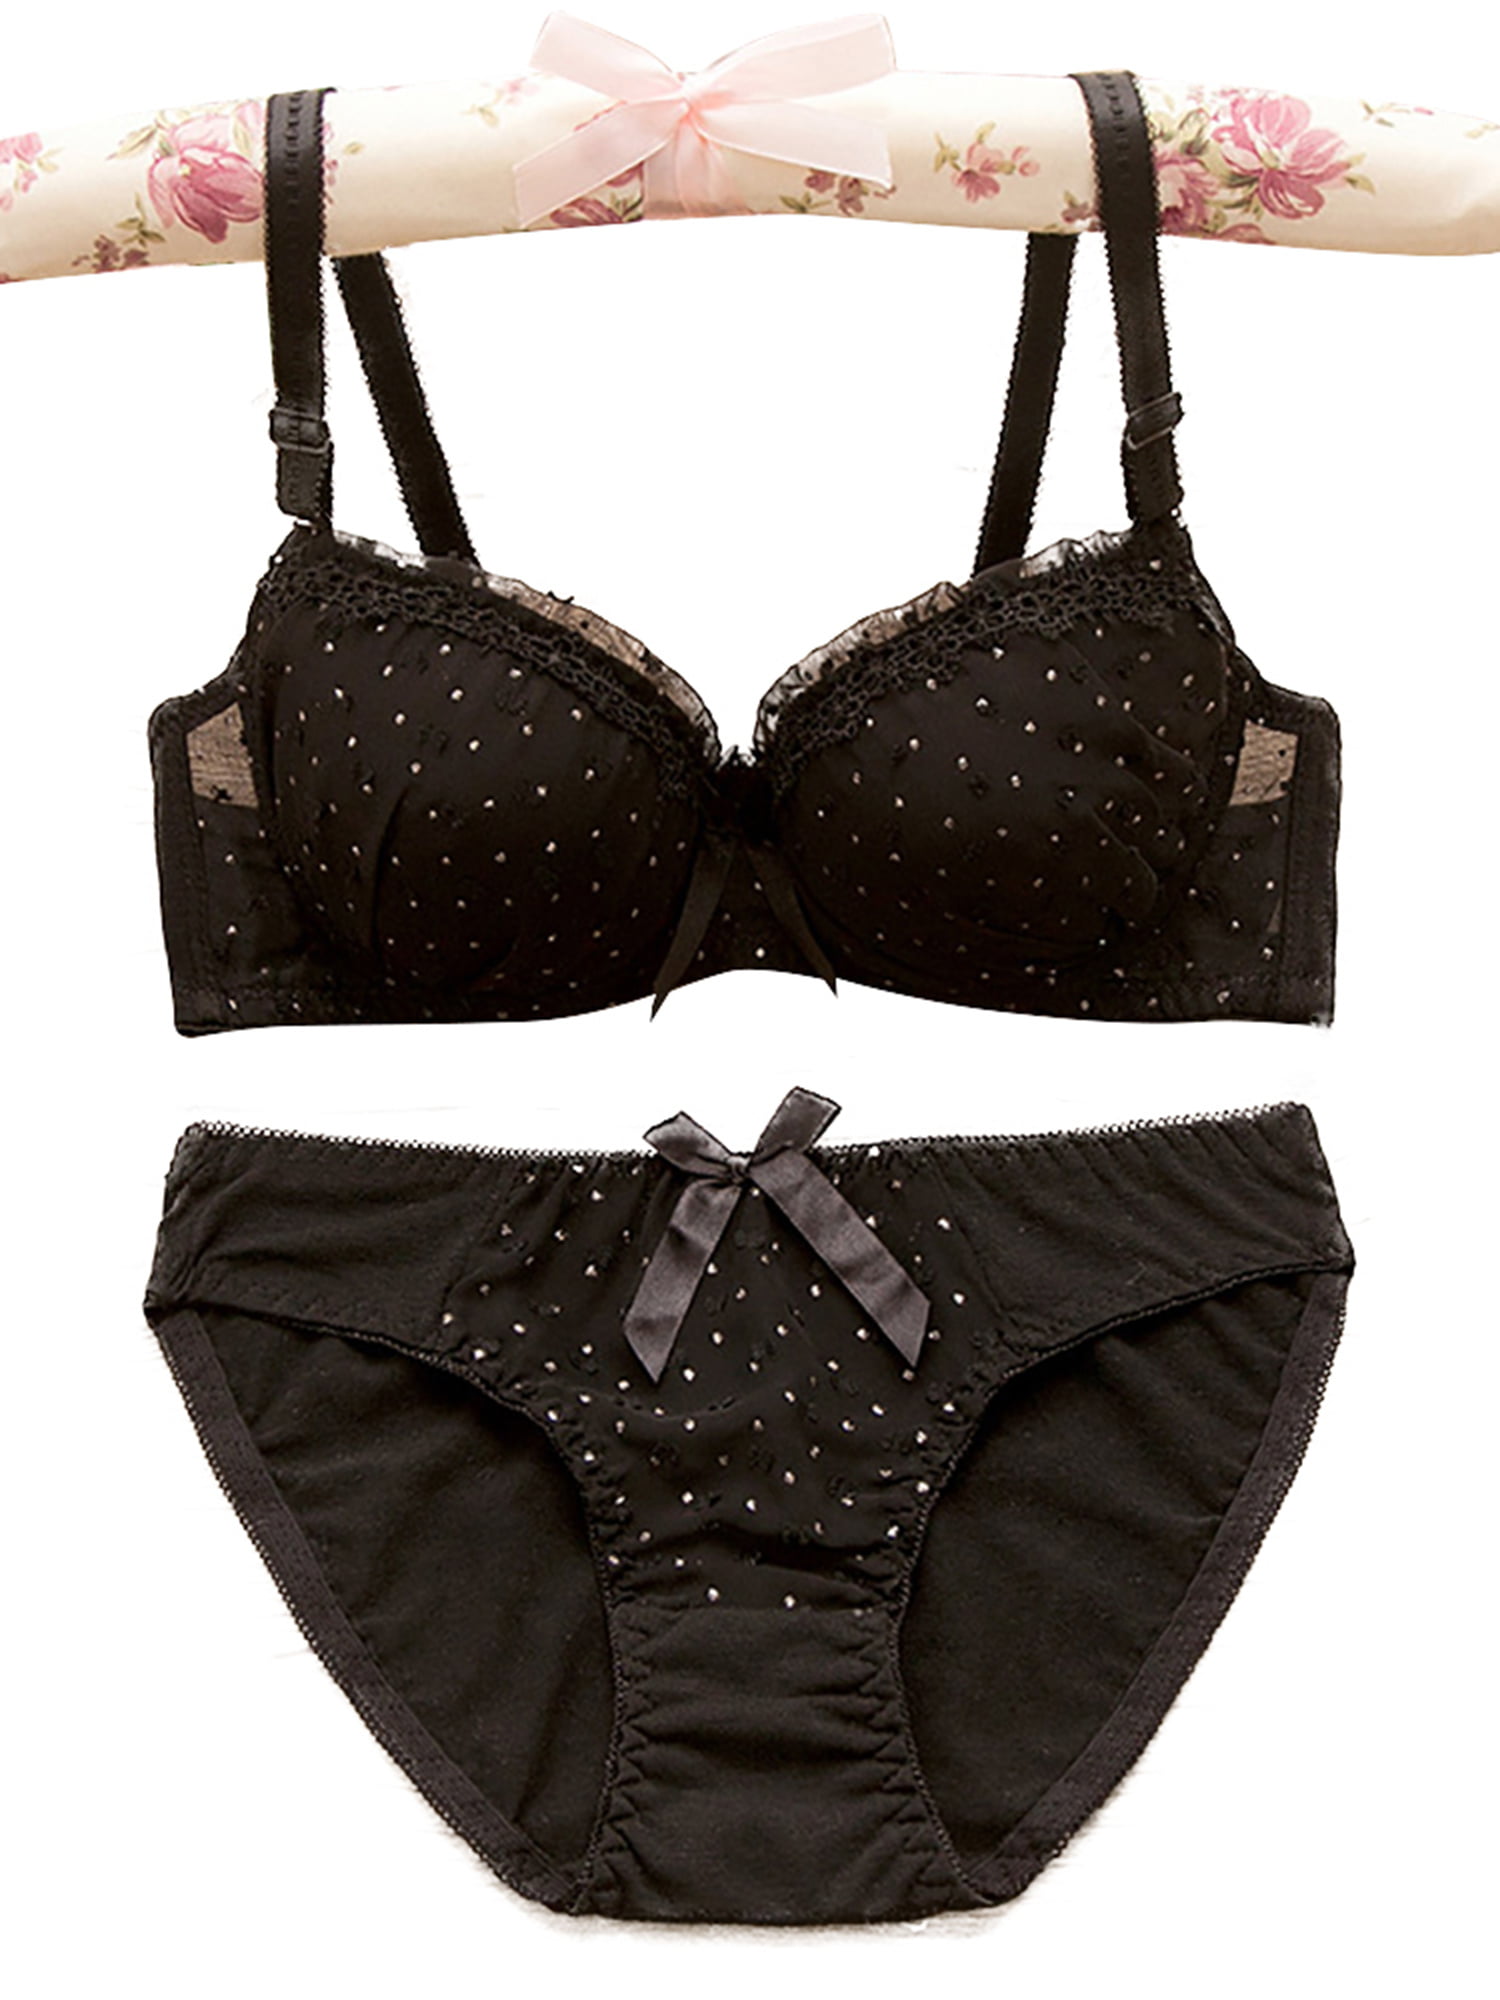 Details about   Sexy Women Leopard Print Bra Underwear G-String Letters Set Seamless Lingerie